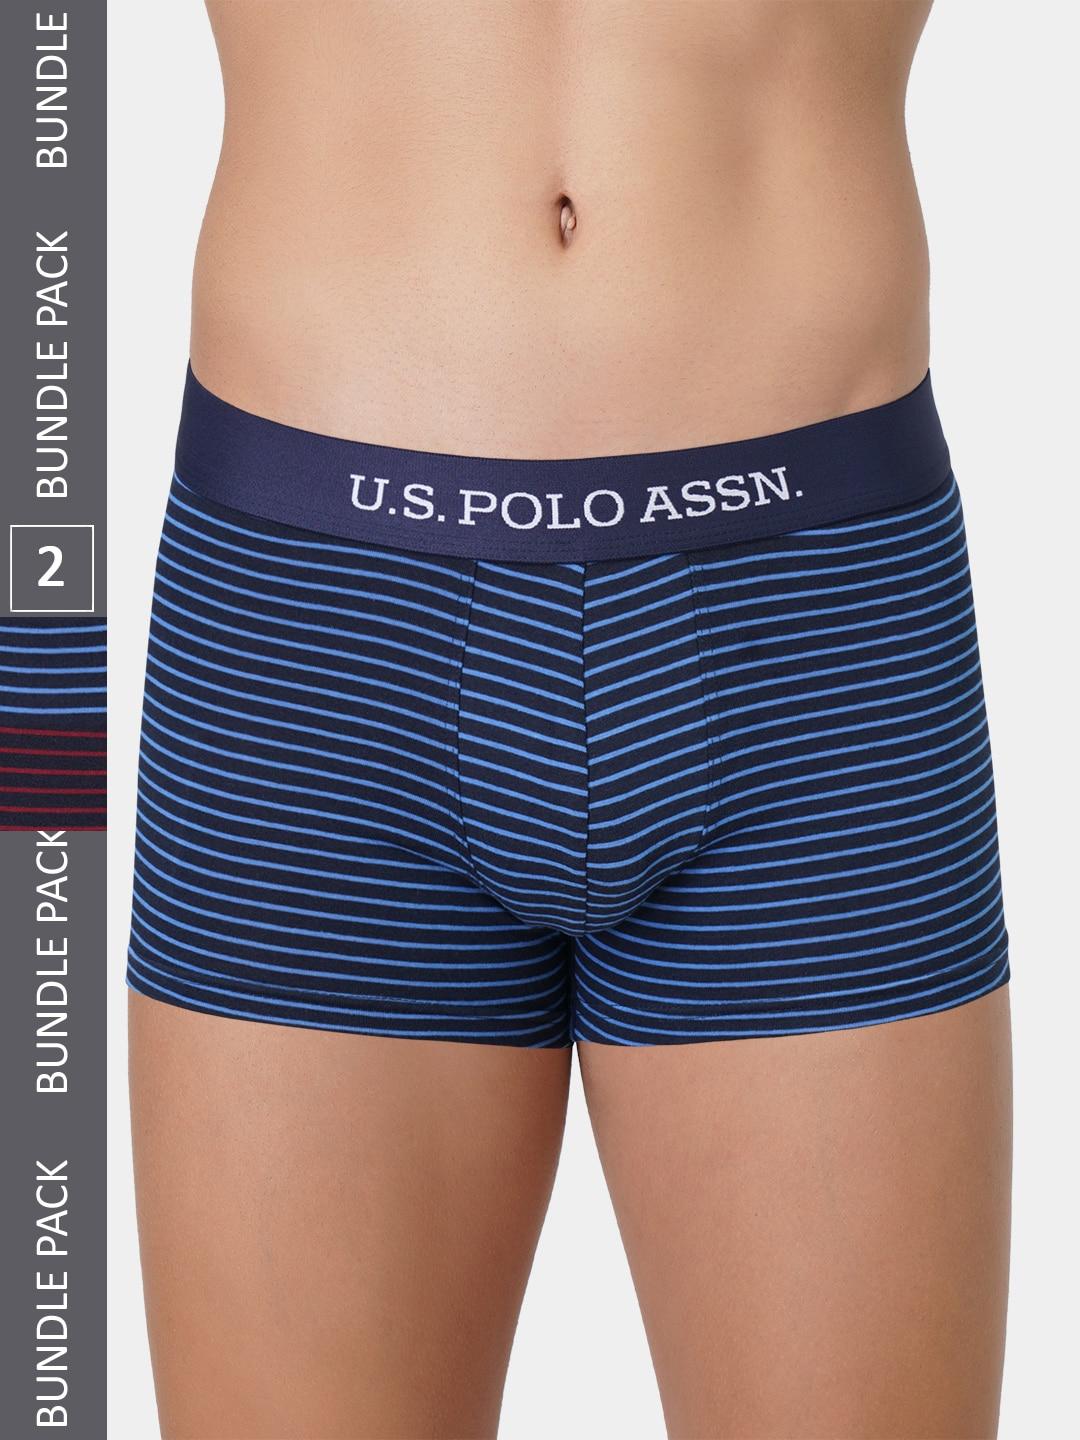 u.s.-polo-assn.-men-pack-of-2-striped-cotton-mid-rise-trunks-et005-nn1-p2